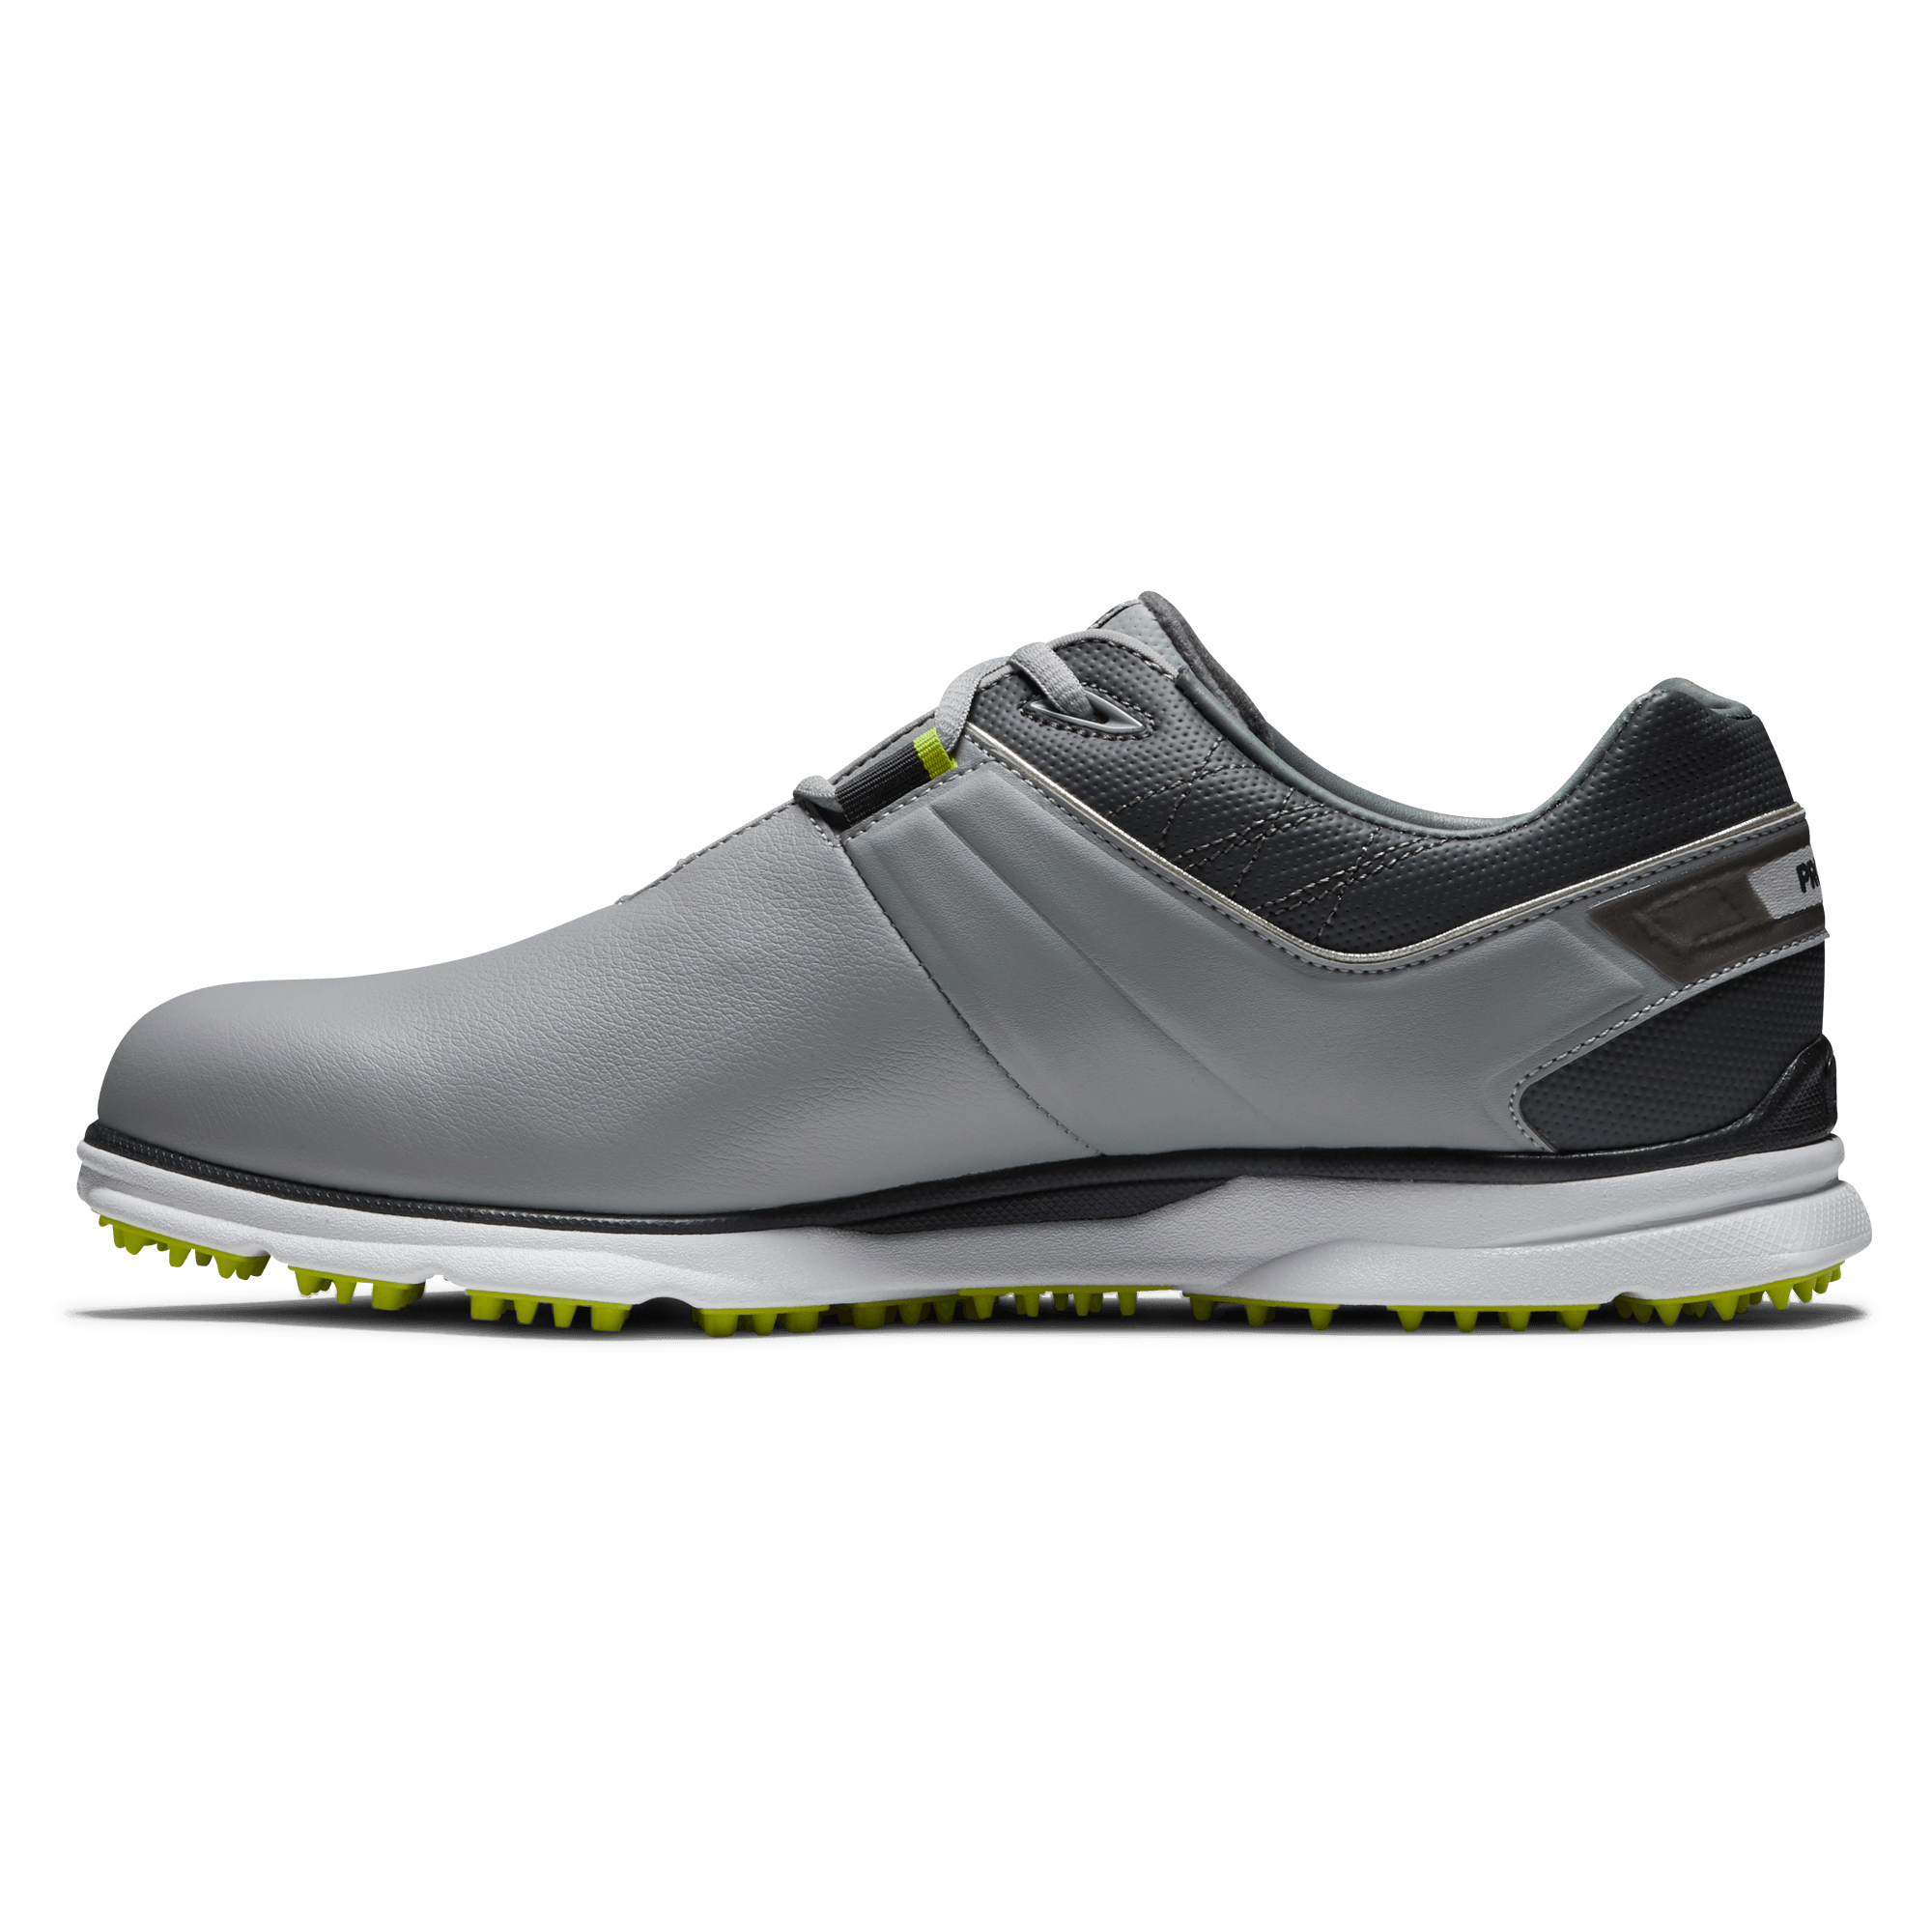 FootJoy Pro SL Golf Shoes #53075 Grey/Charcoal | Scottsdale Golf